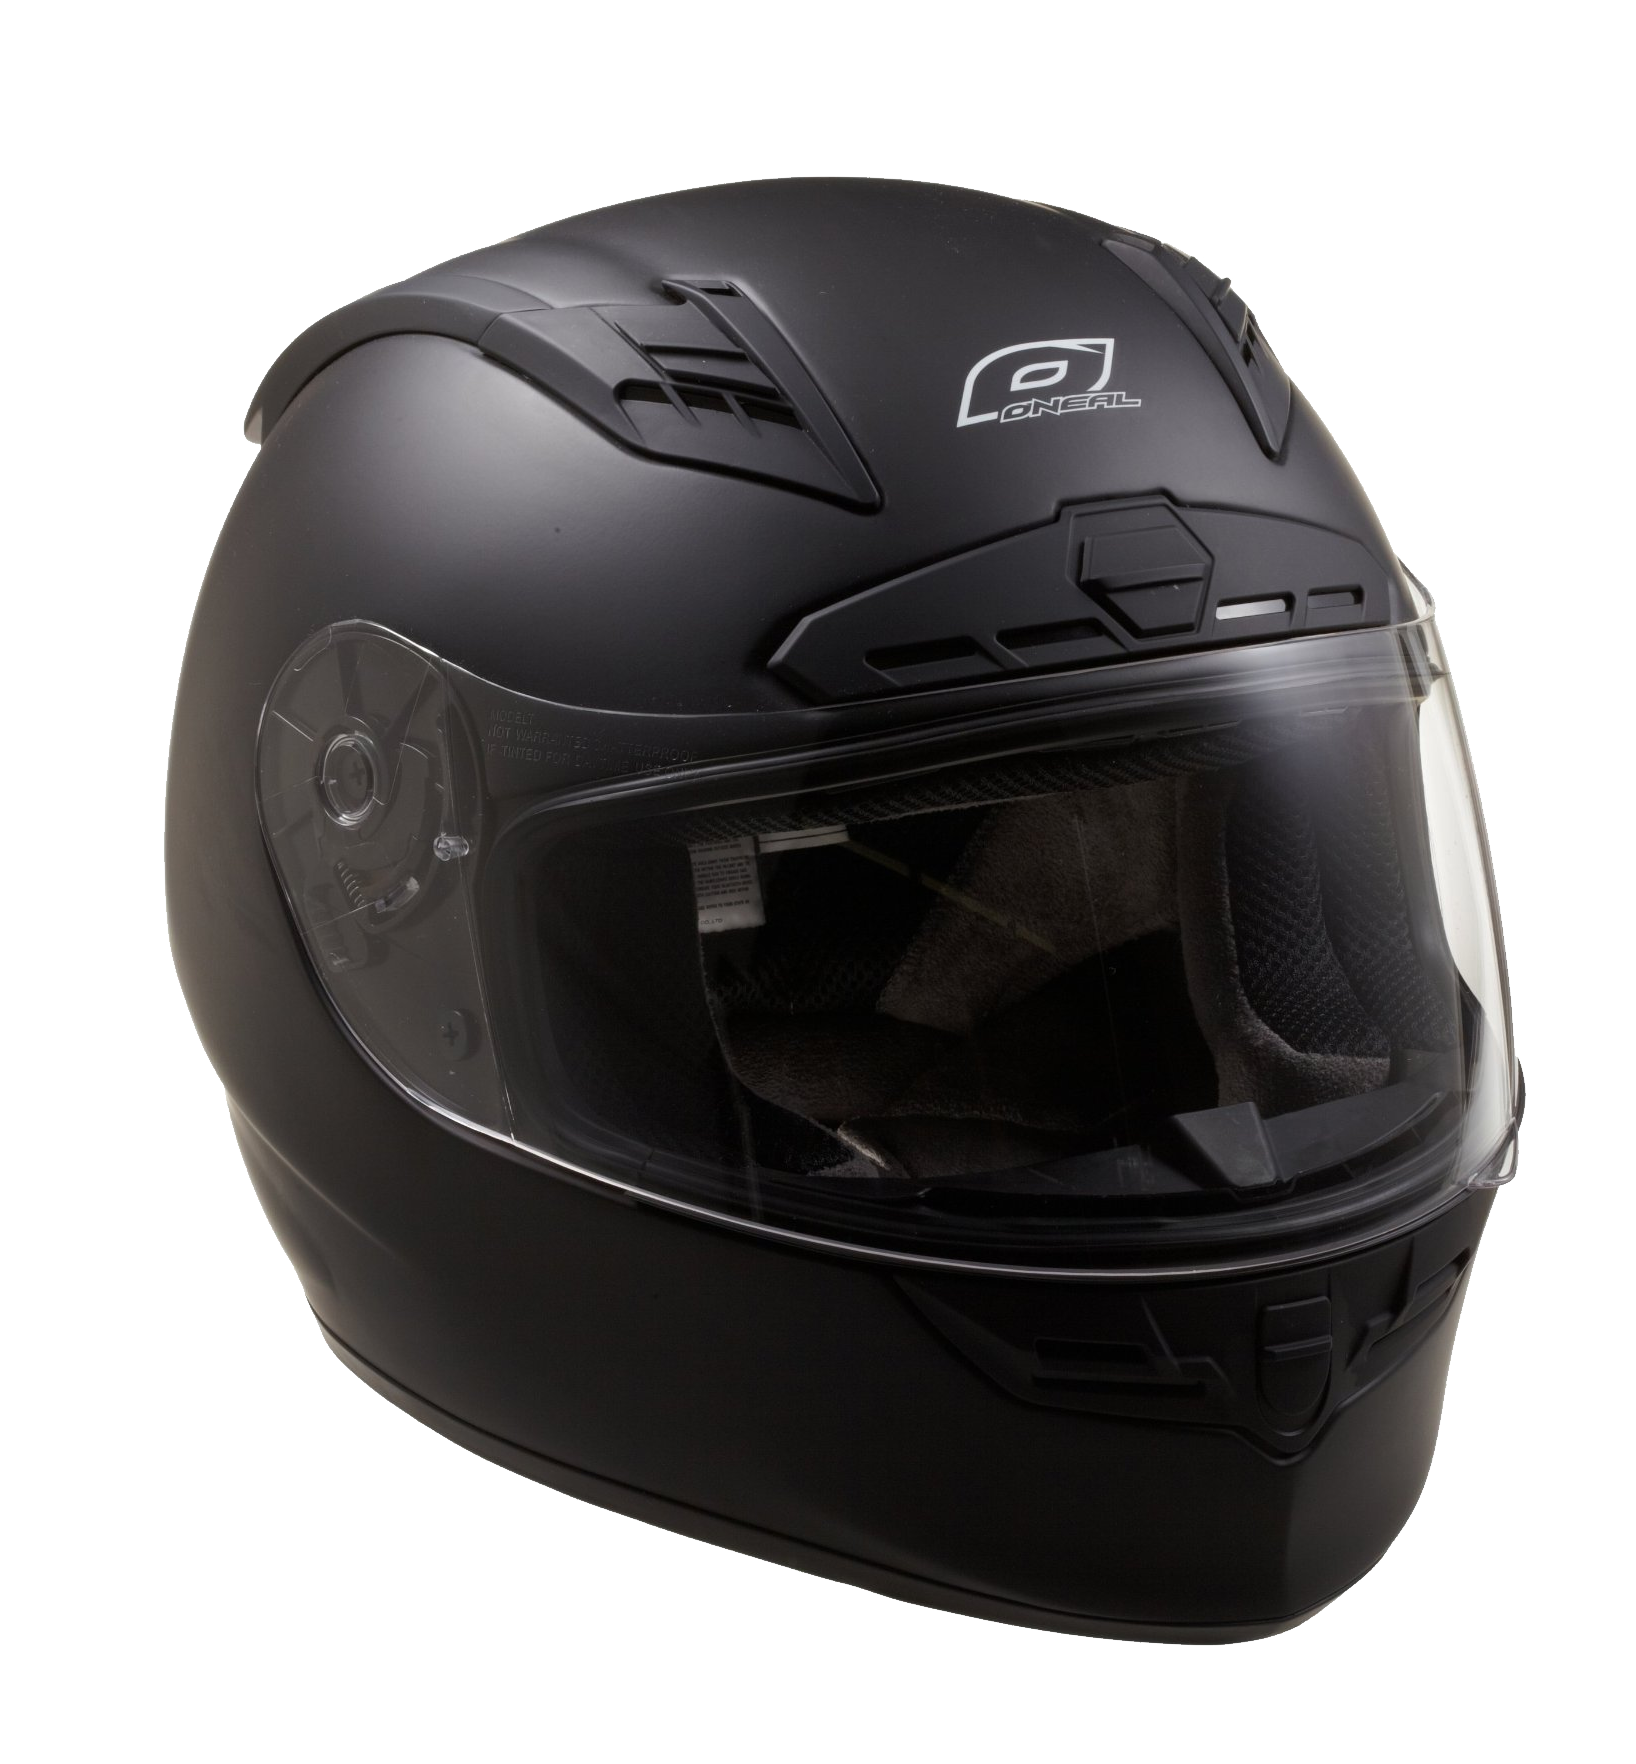 Black Motorcycle Helmet PNG File Transparent